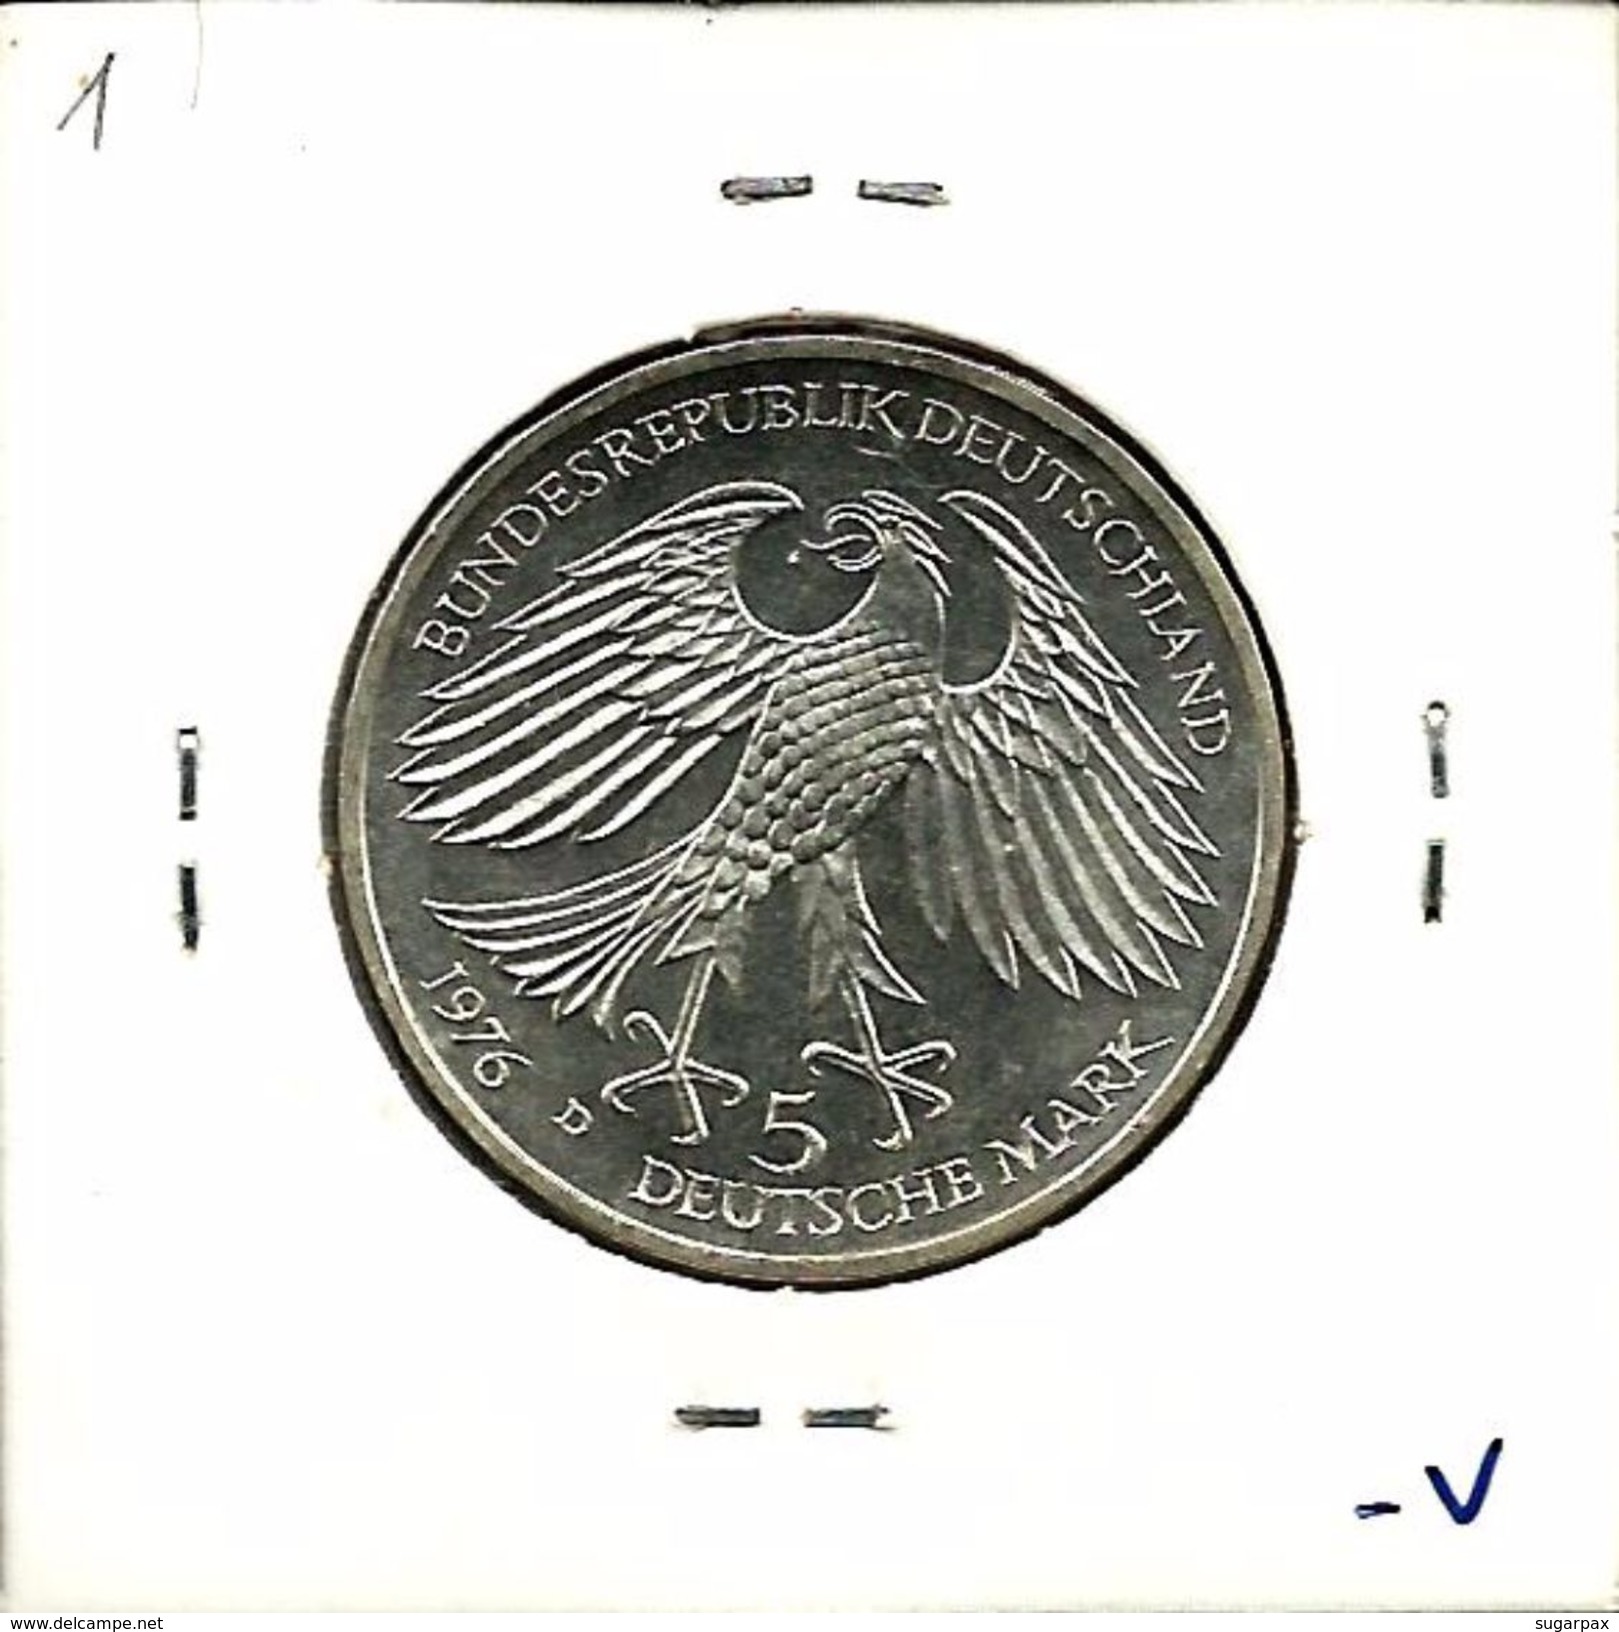 GERMANY Fed. Rep. - 5 DM 1976 D - KM # 144 - Silver Argent - Von Grimmelshausen - 5 Marcos